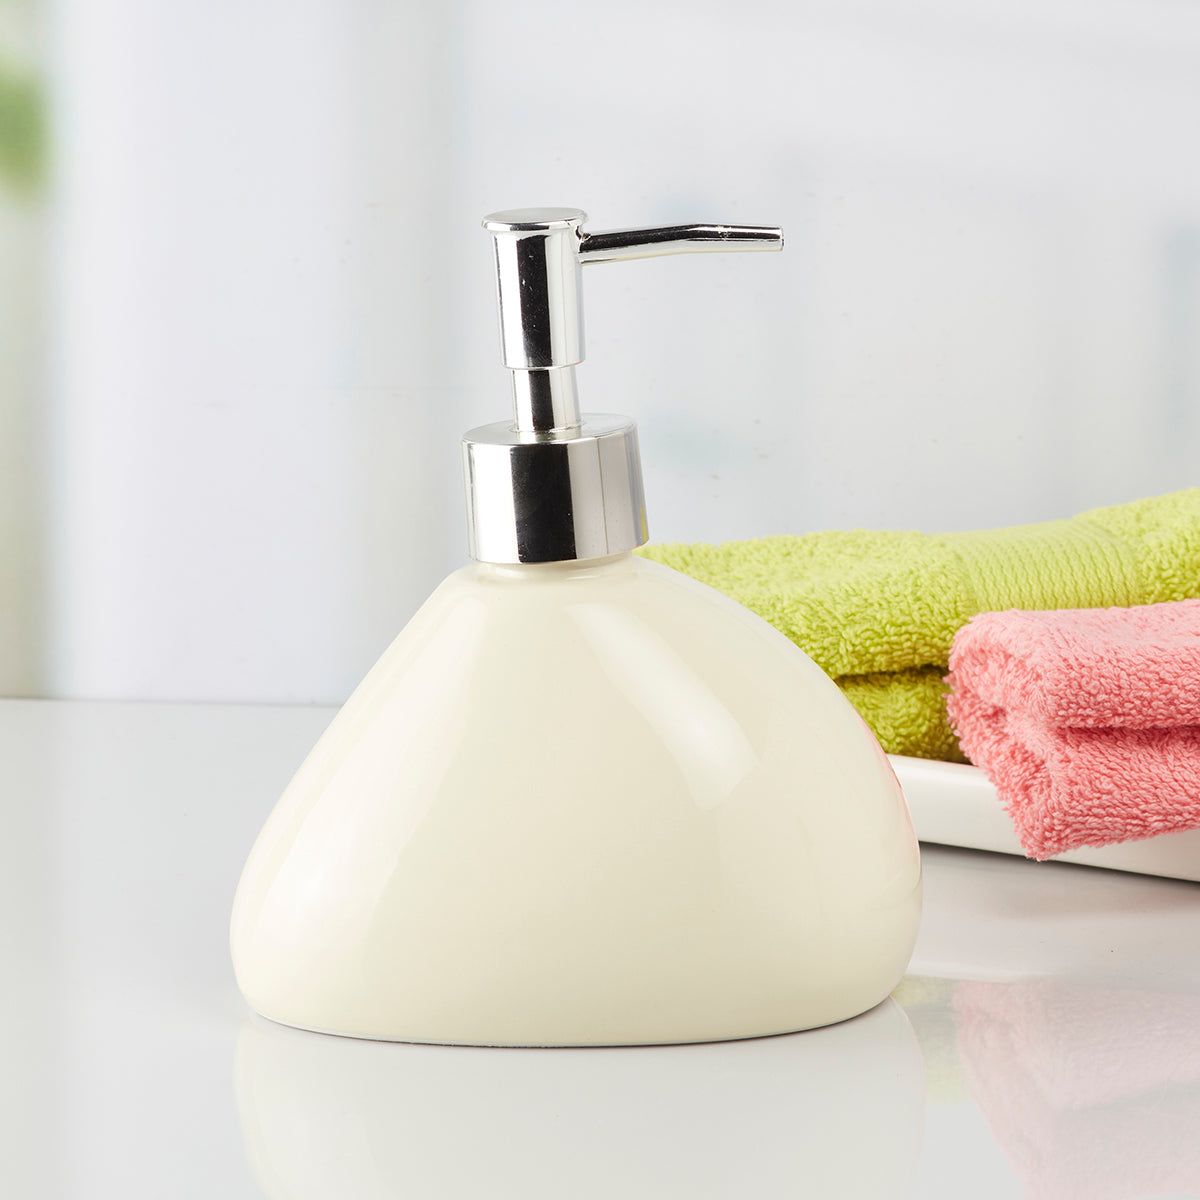 Kookee Ceramic Soap Dispenser for Bathroom handwash, refillable pump bottle for Kitchen hand wash basin, Set of 1, Cream (7968)